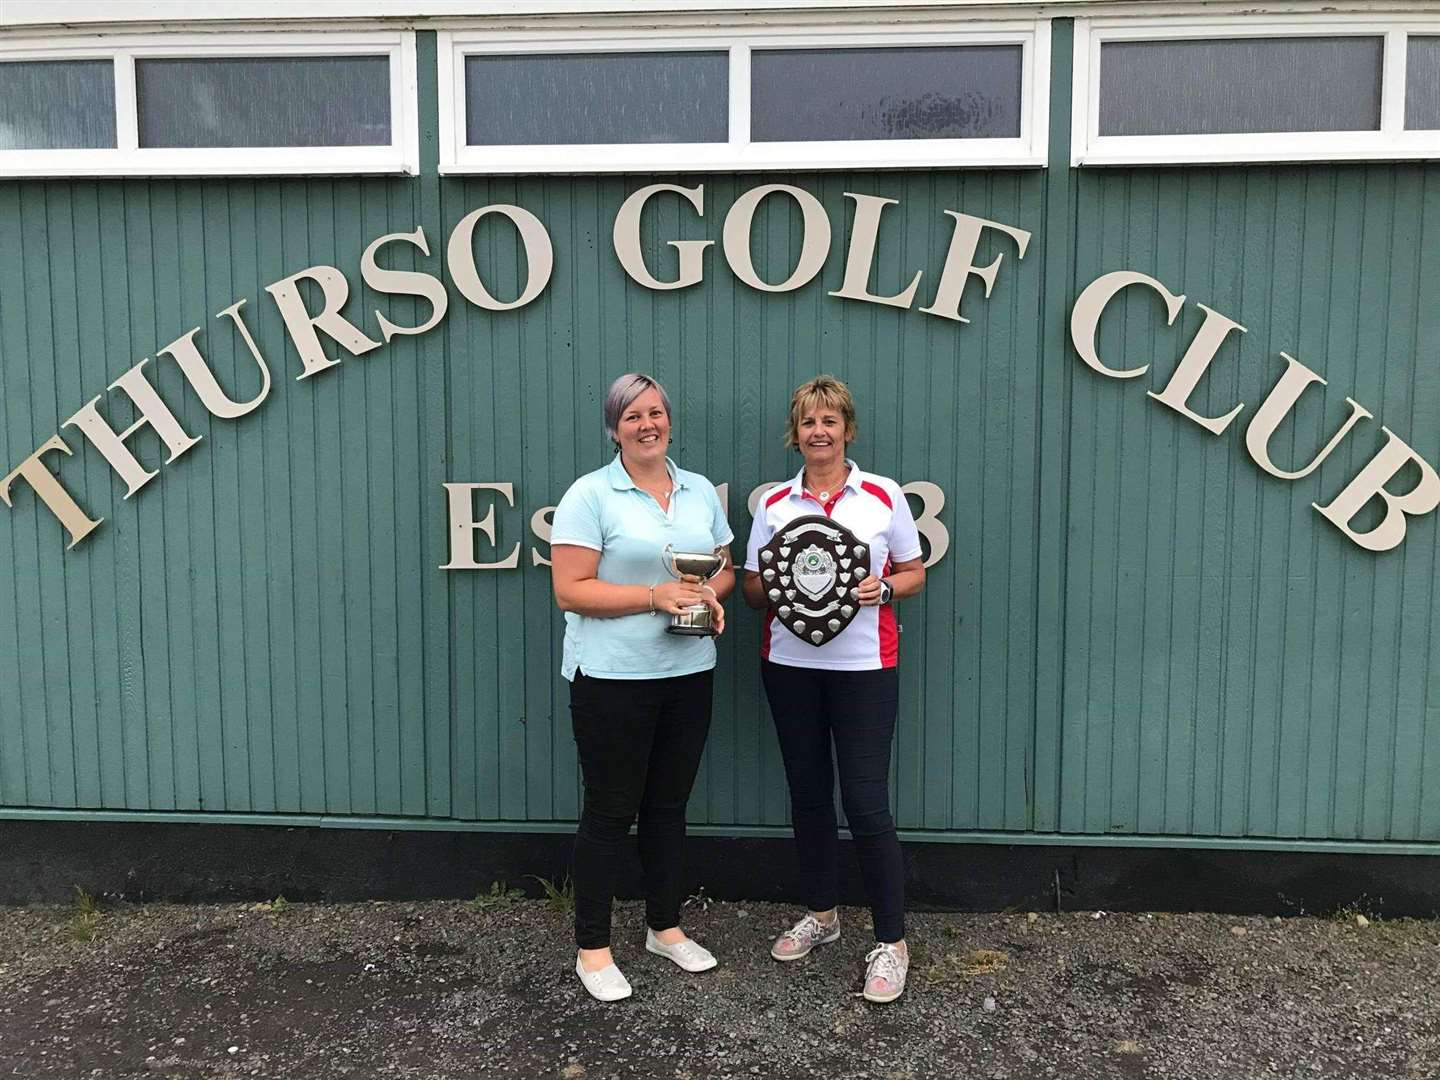 Thurso ladies’ club championship scratch winner Laura Durrand (left) and handicap winner Angela Williamson.